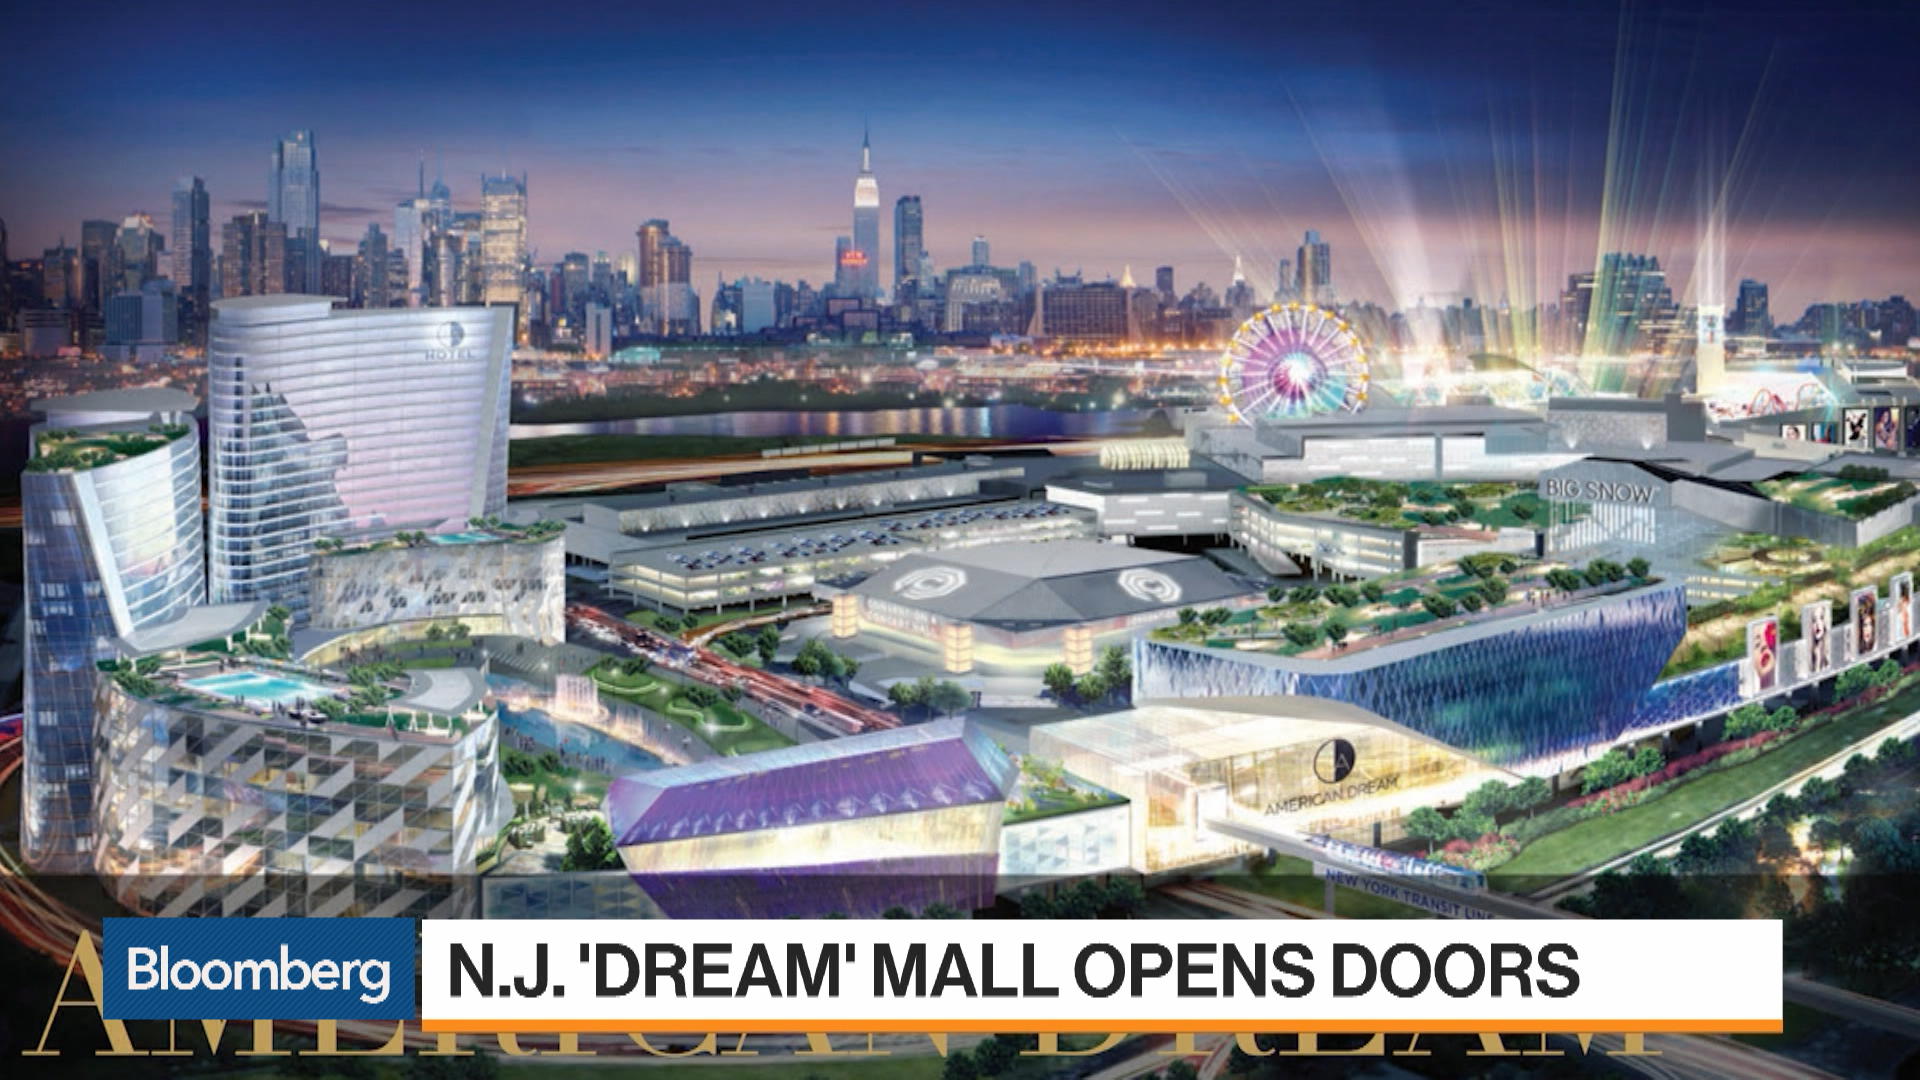 American Dream mall, Bergen County, New Jersey, USA